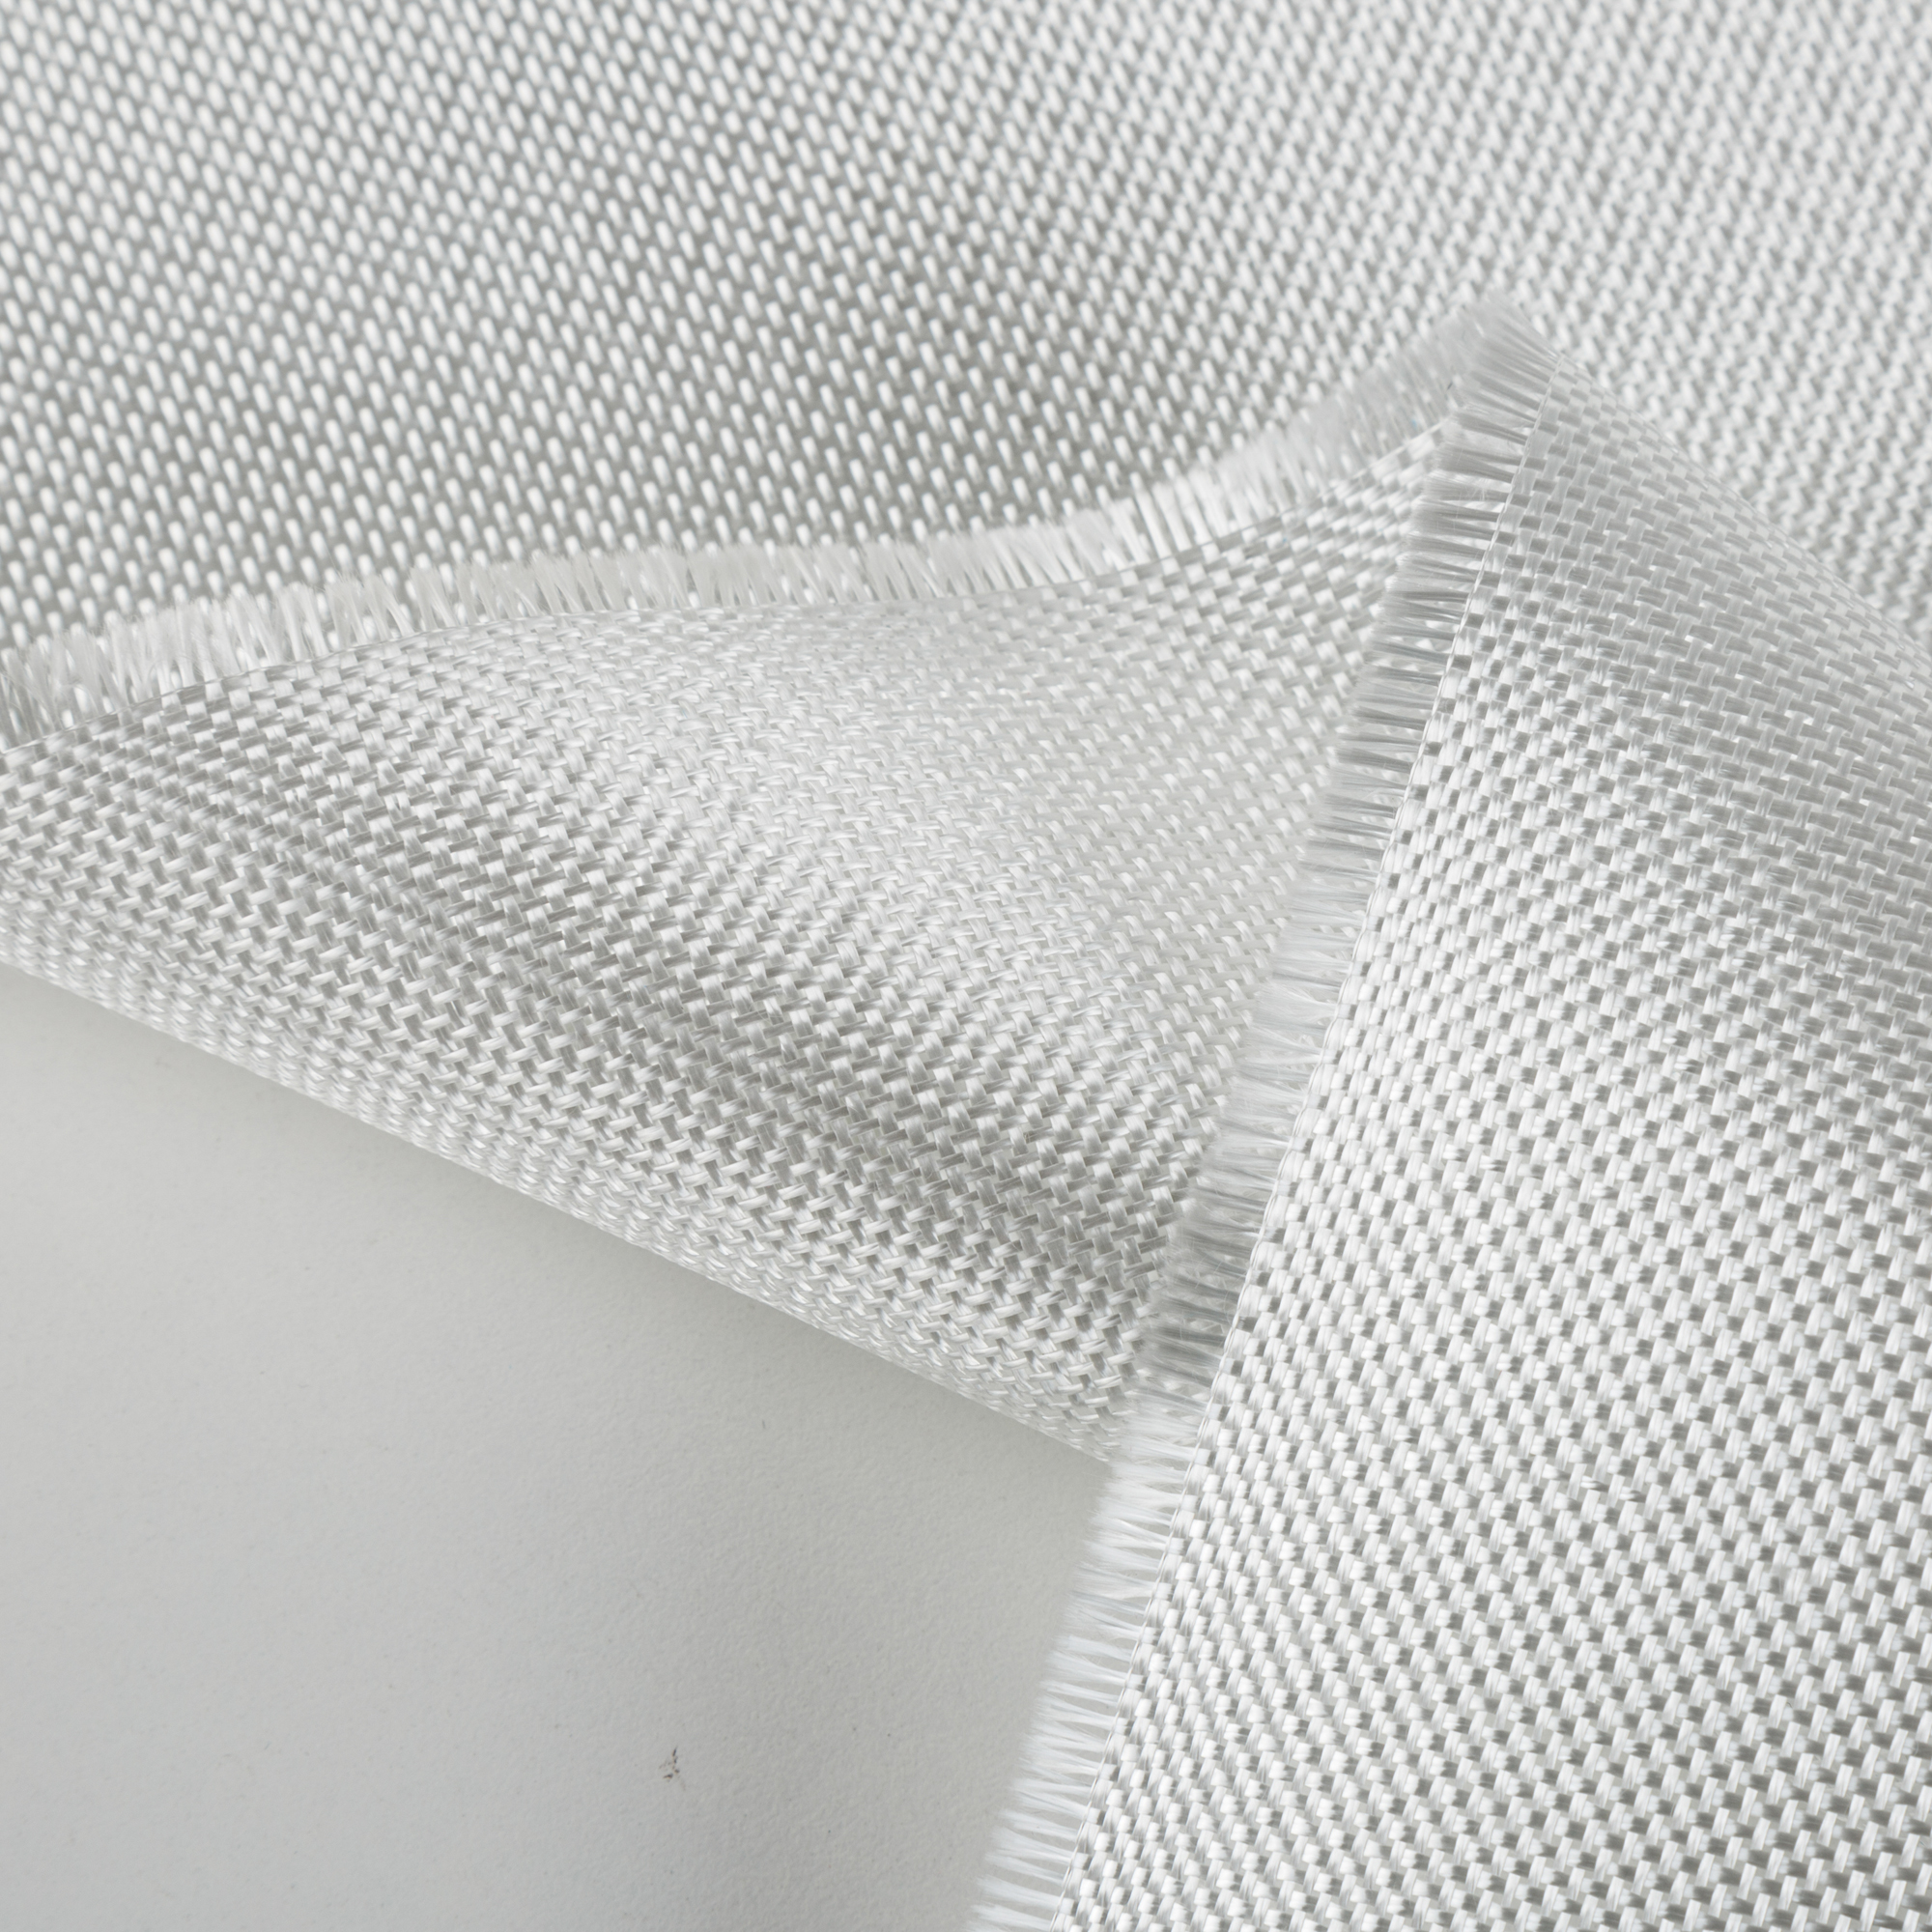 Boat making insulation e glass fiber fiberglass fabric